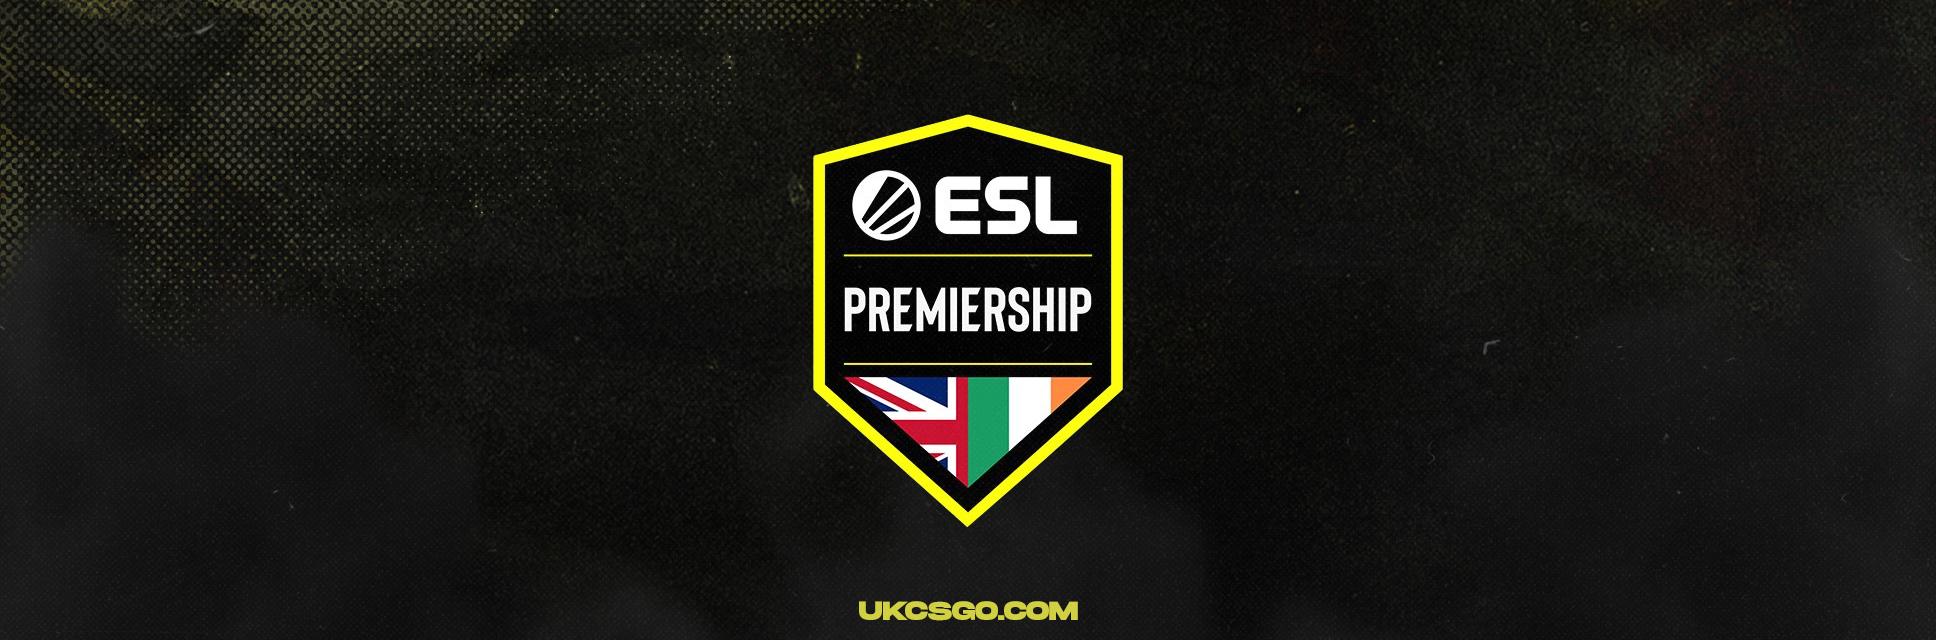 ESL Premiership logo on black background with UKCSGO.com at the bottom